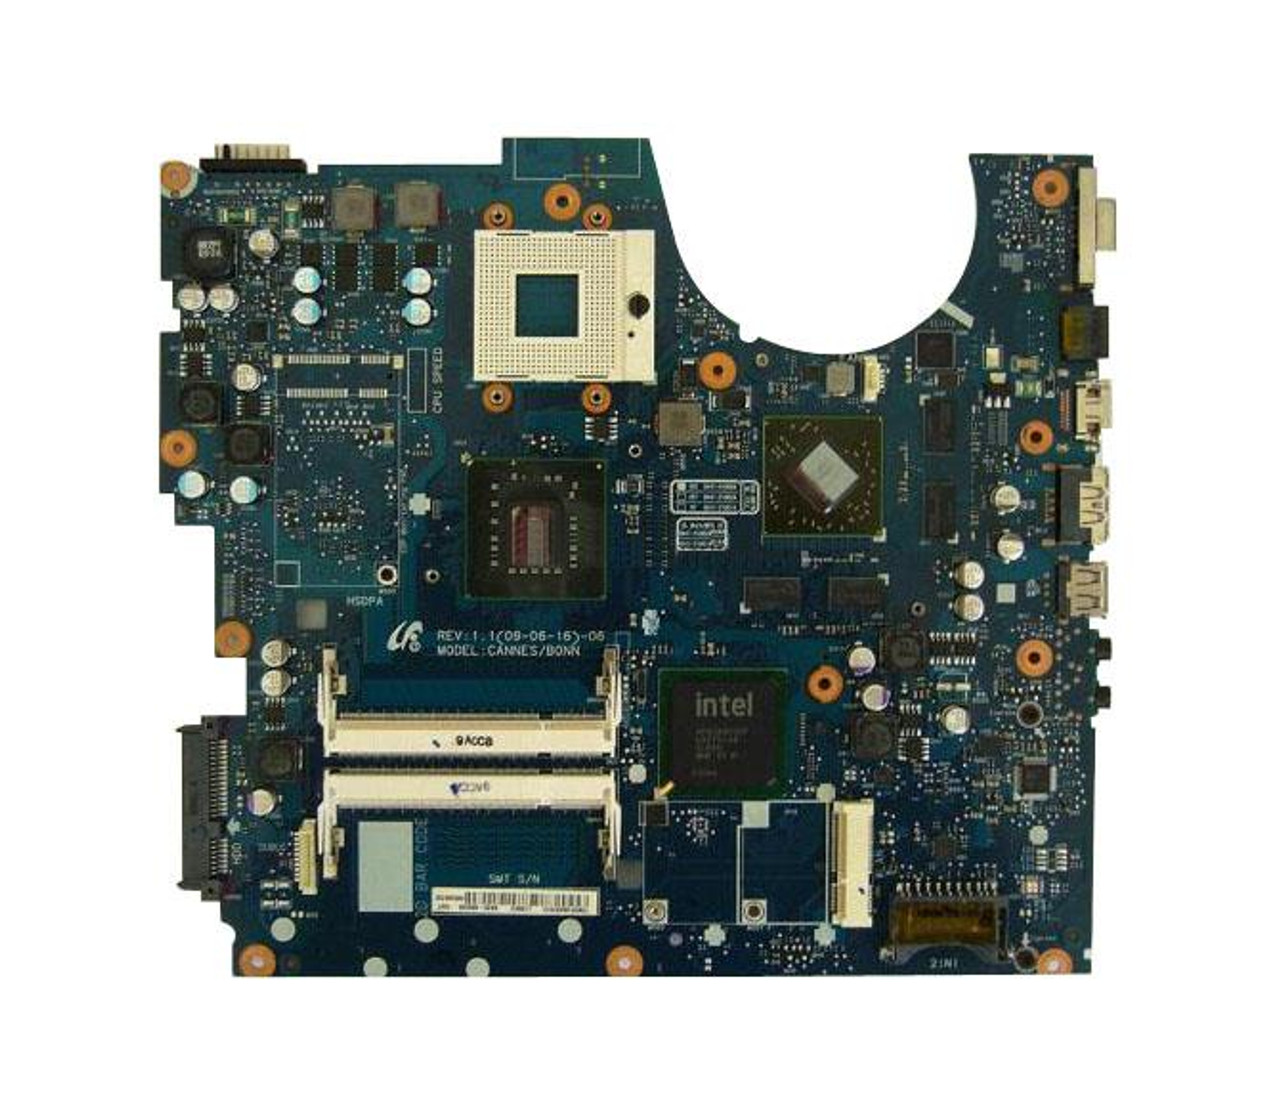 BA81-09157A Samsung System Board (Motherboard) for R720 Notebook (Refurbished)